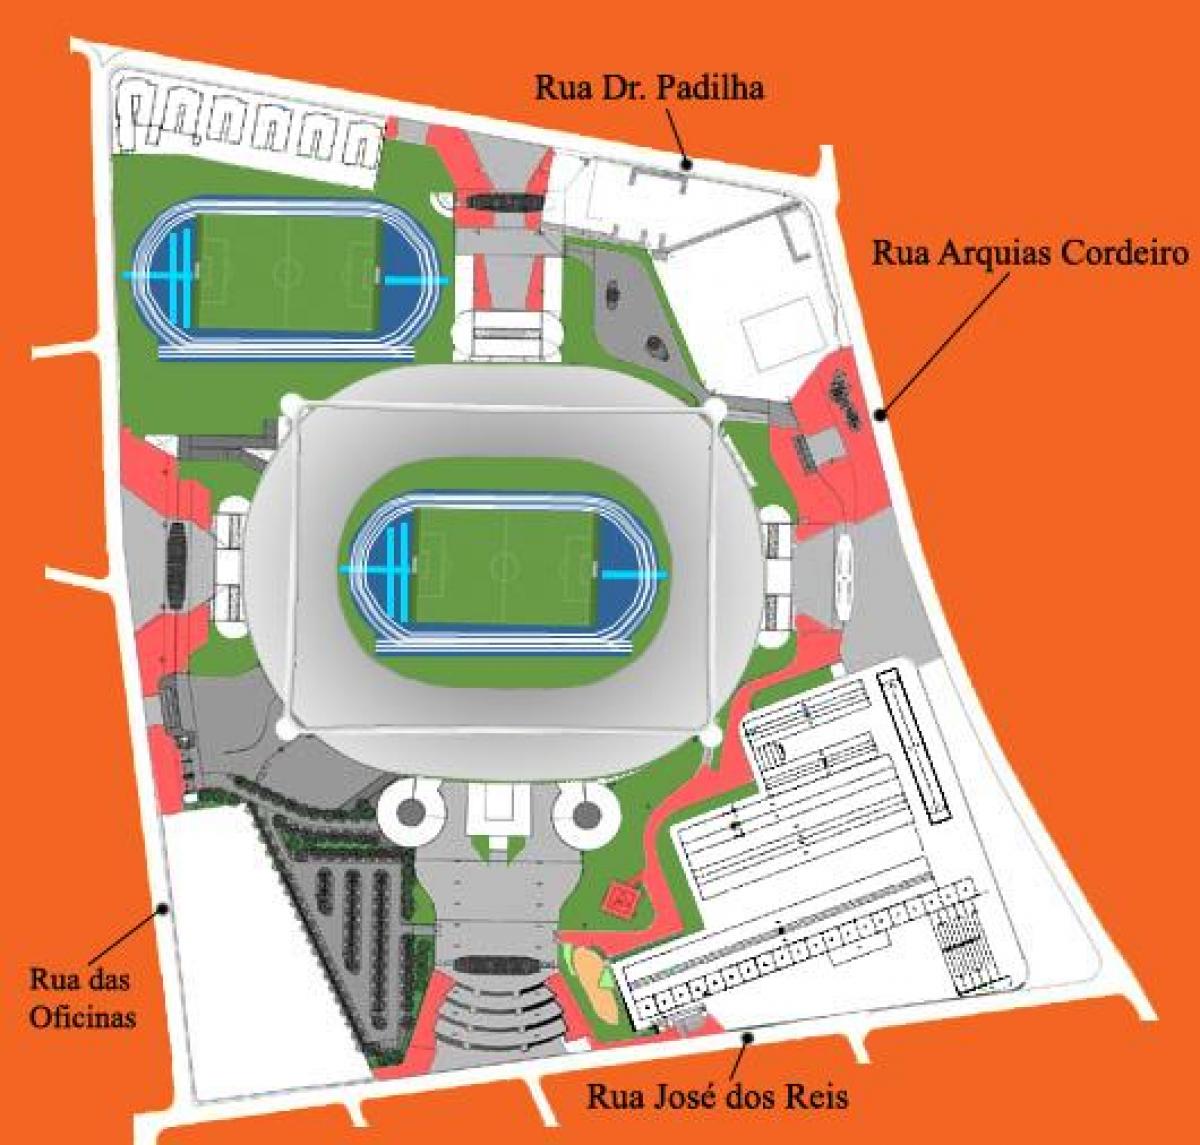 Картицу стадиона Жоао авеланжа у энженьяне